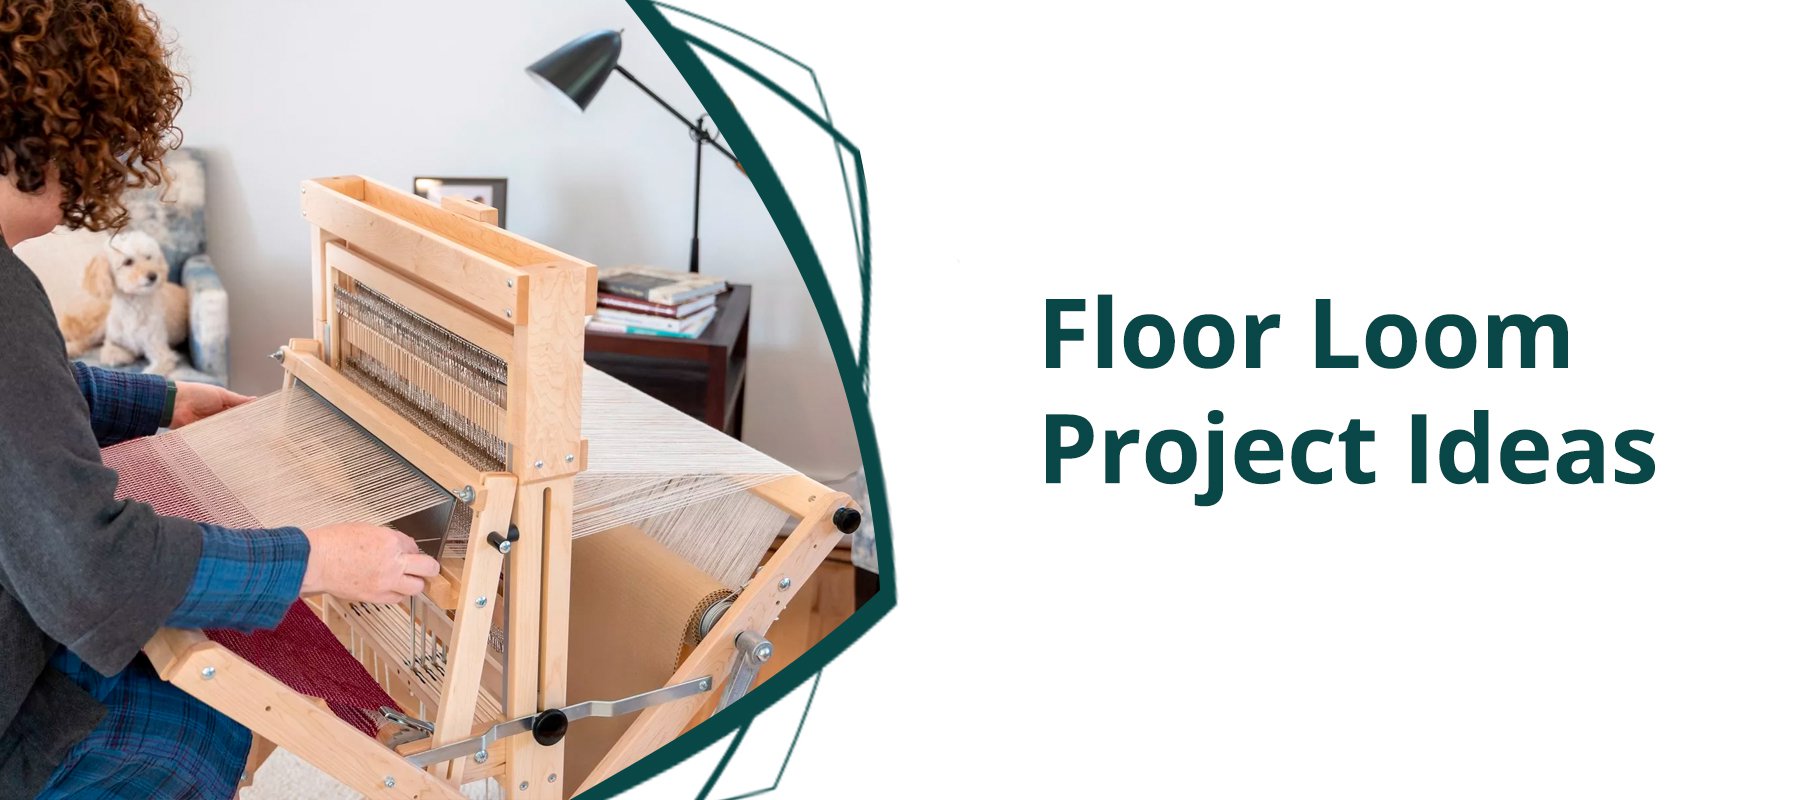 Weaving on a Big Loom: Floor Loom Weaving Project Ideas